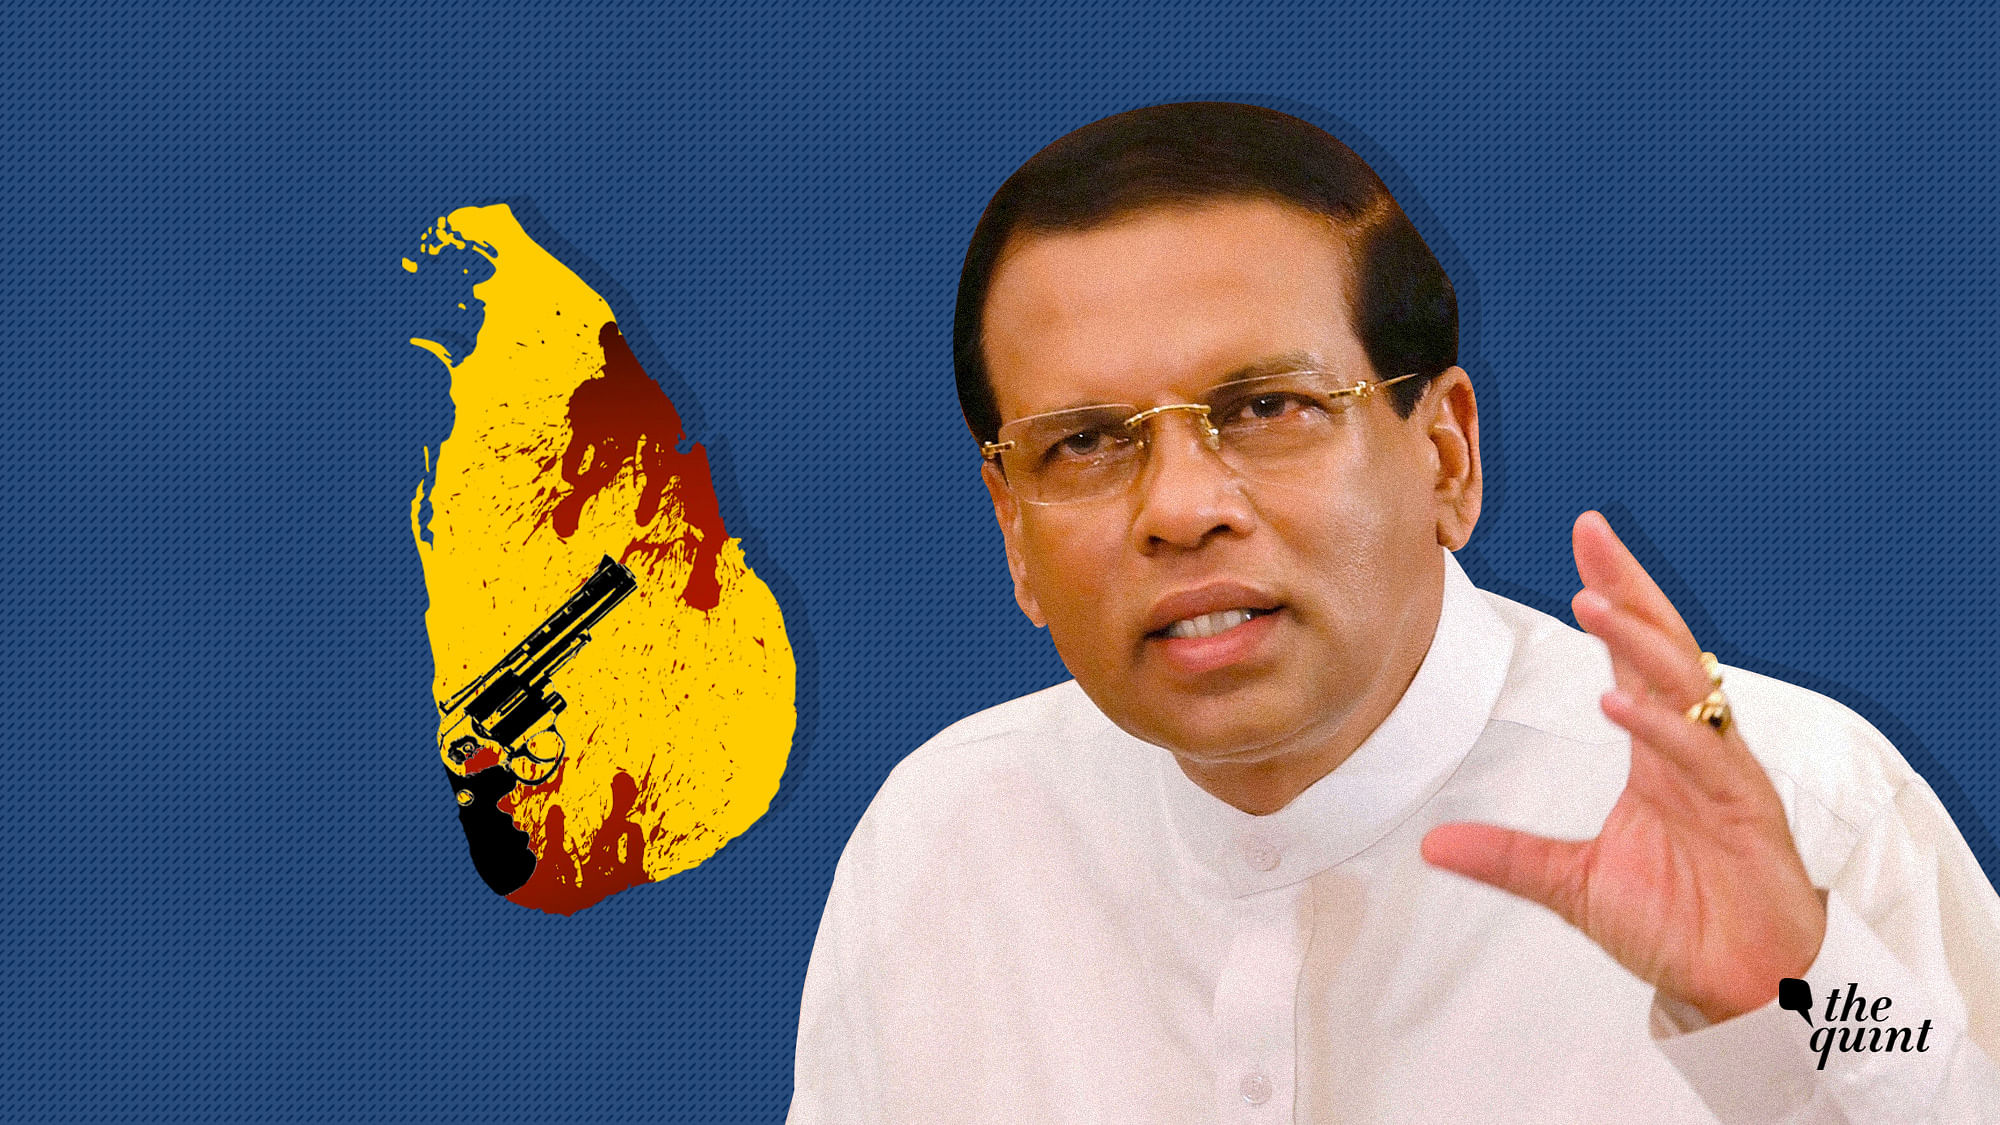 Image of Sri Lanka map and President Sirisena used for representational purposes.